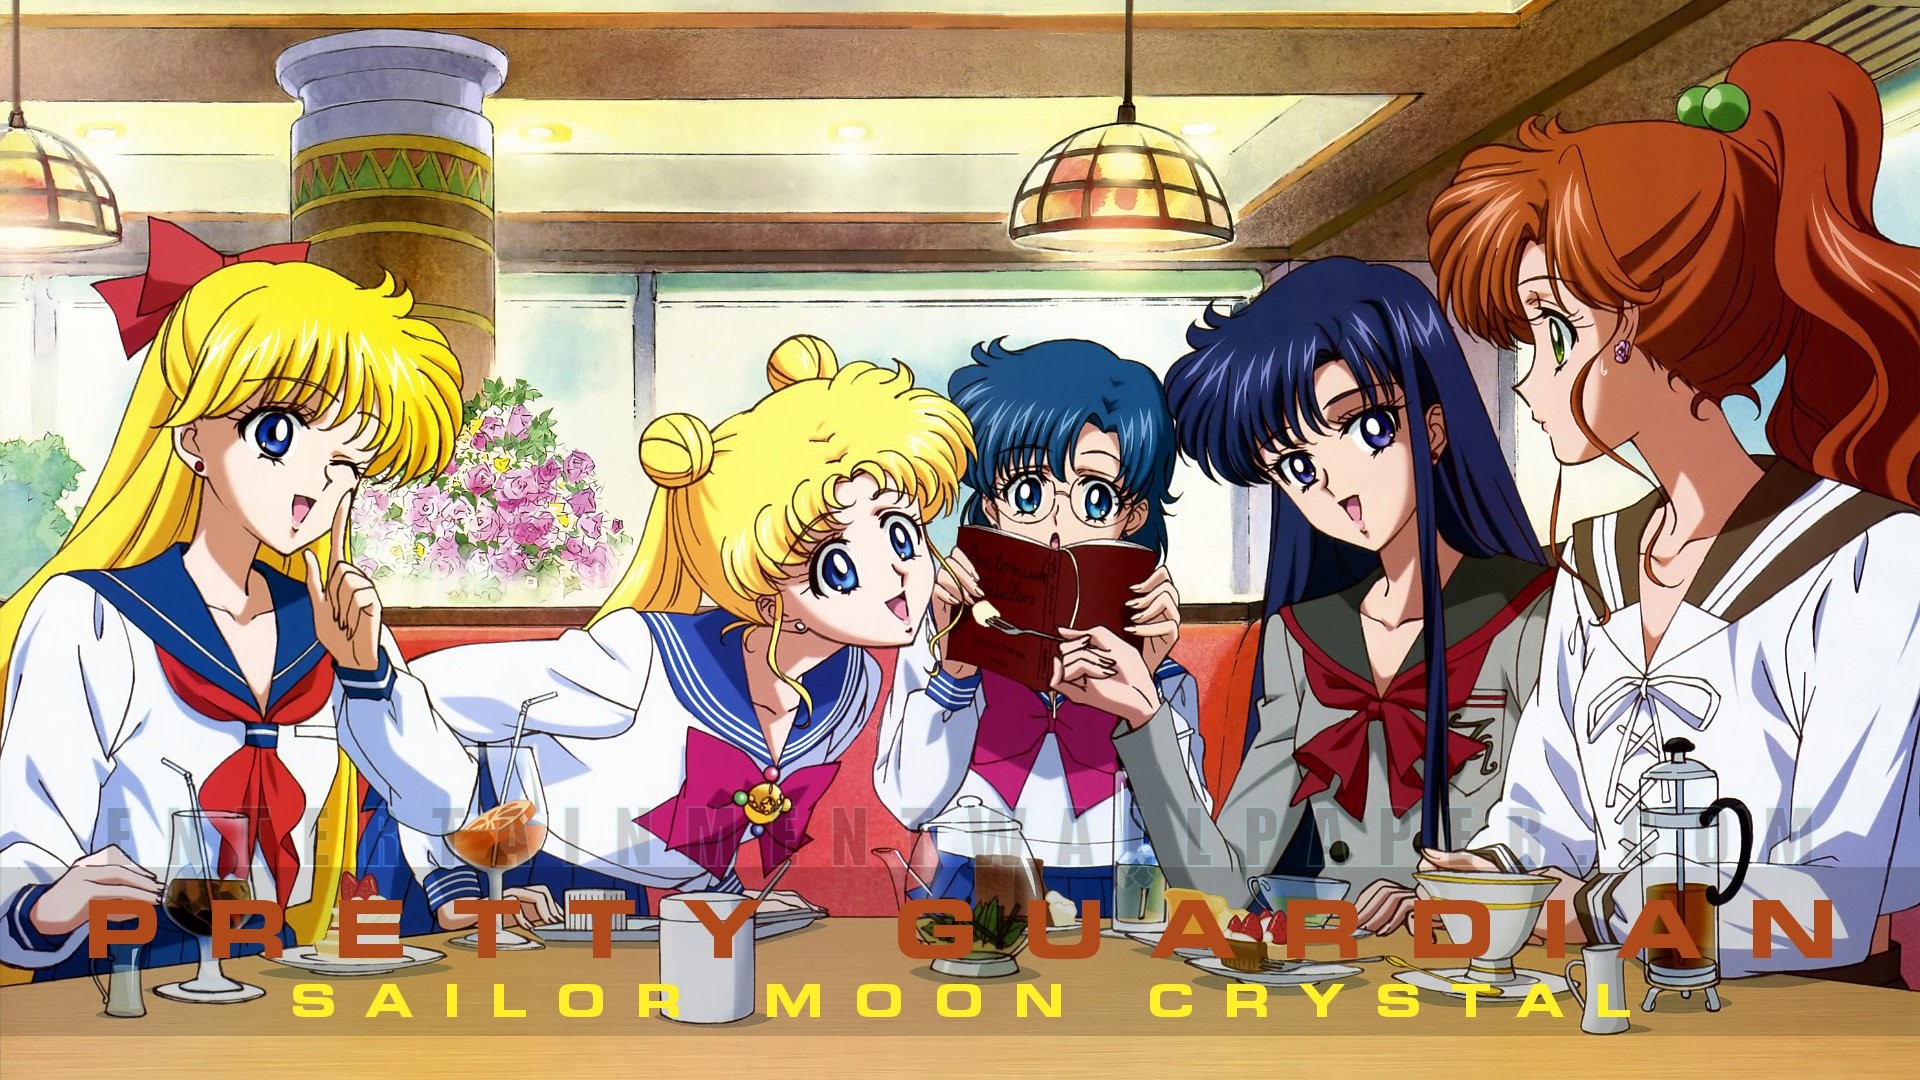 Pretty Guardian Sailor Moon Crystal Wallpaper – Original size, download now.